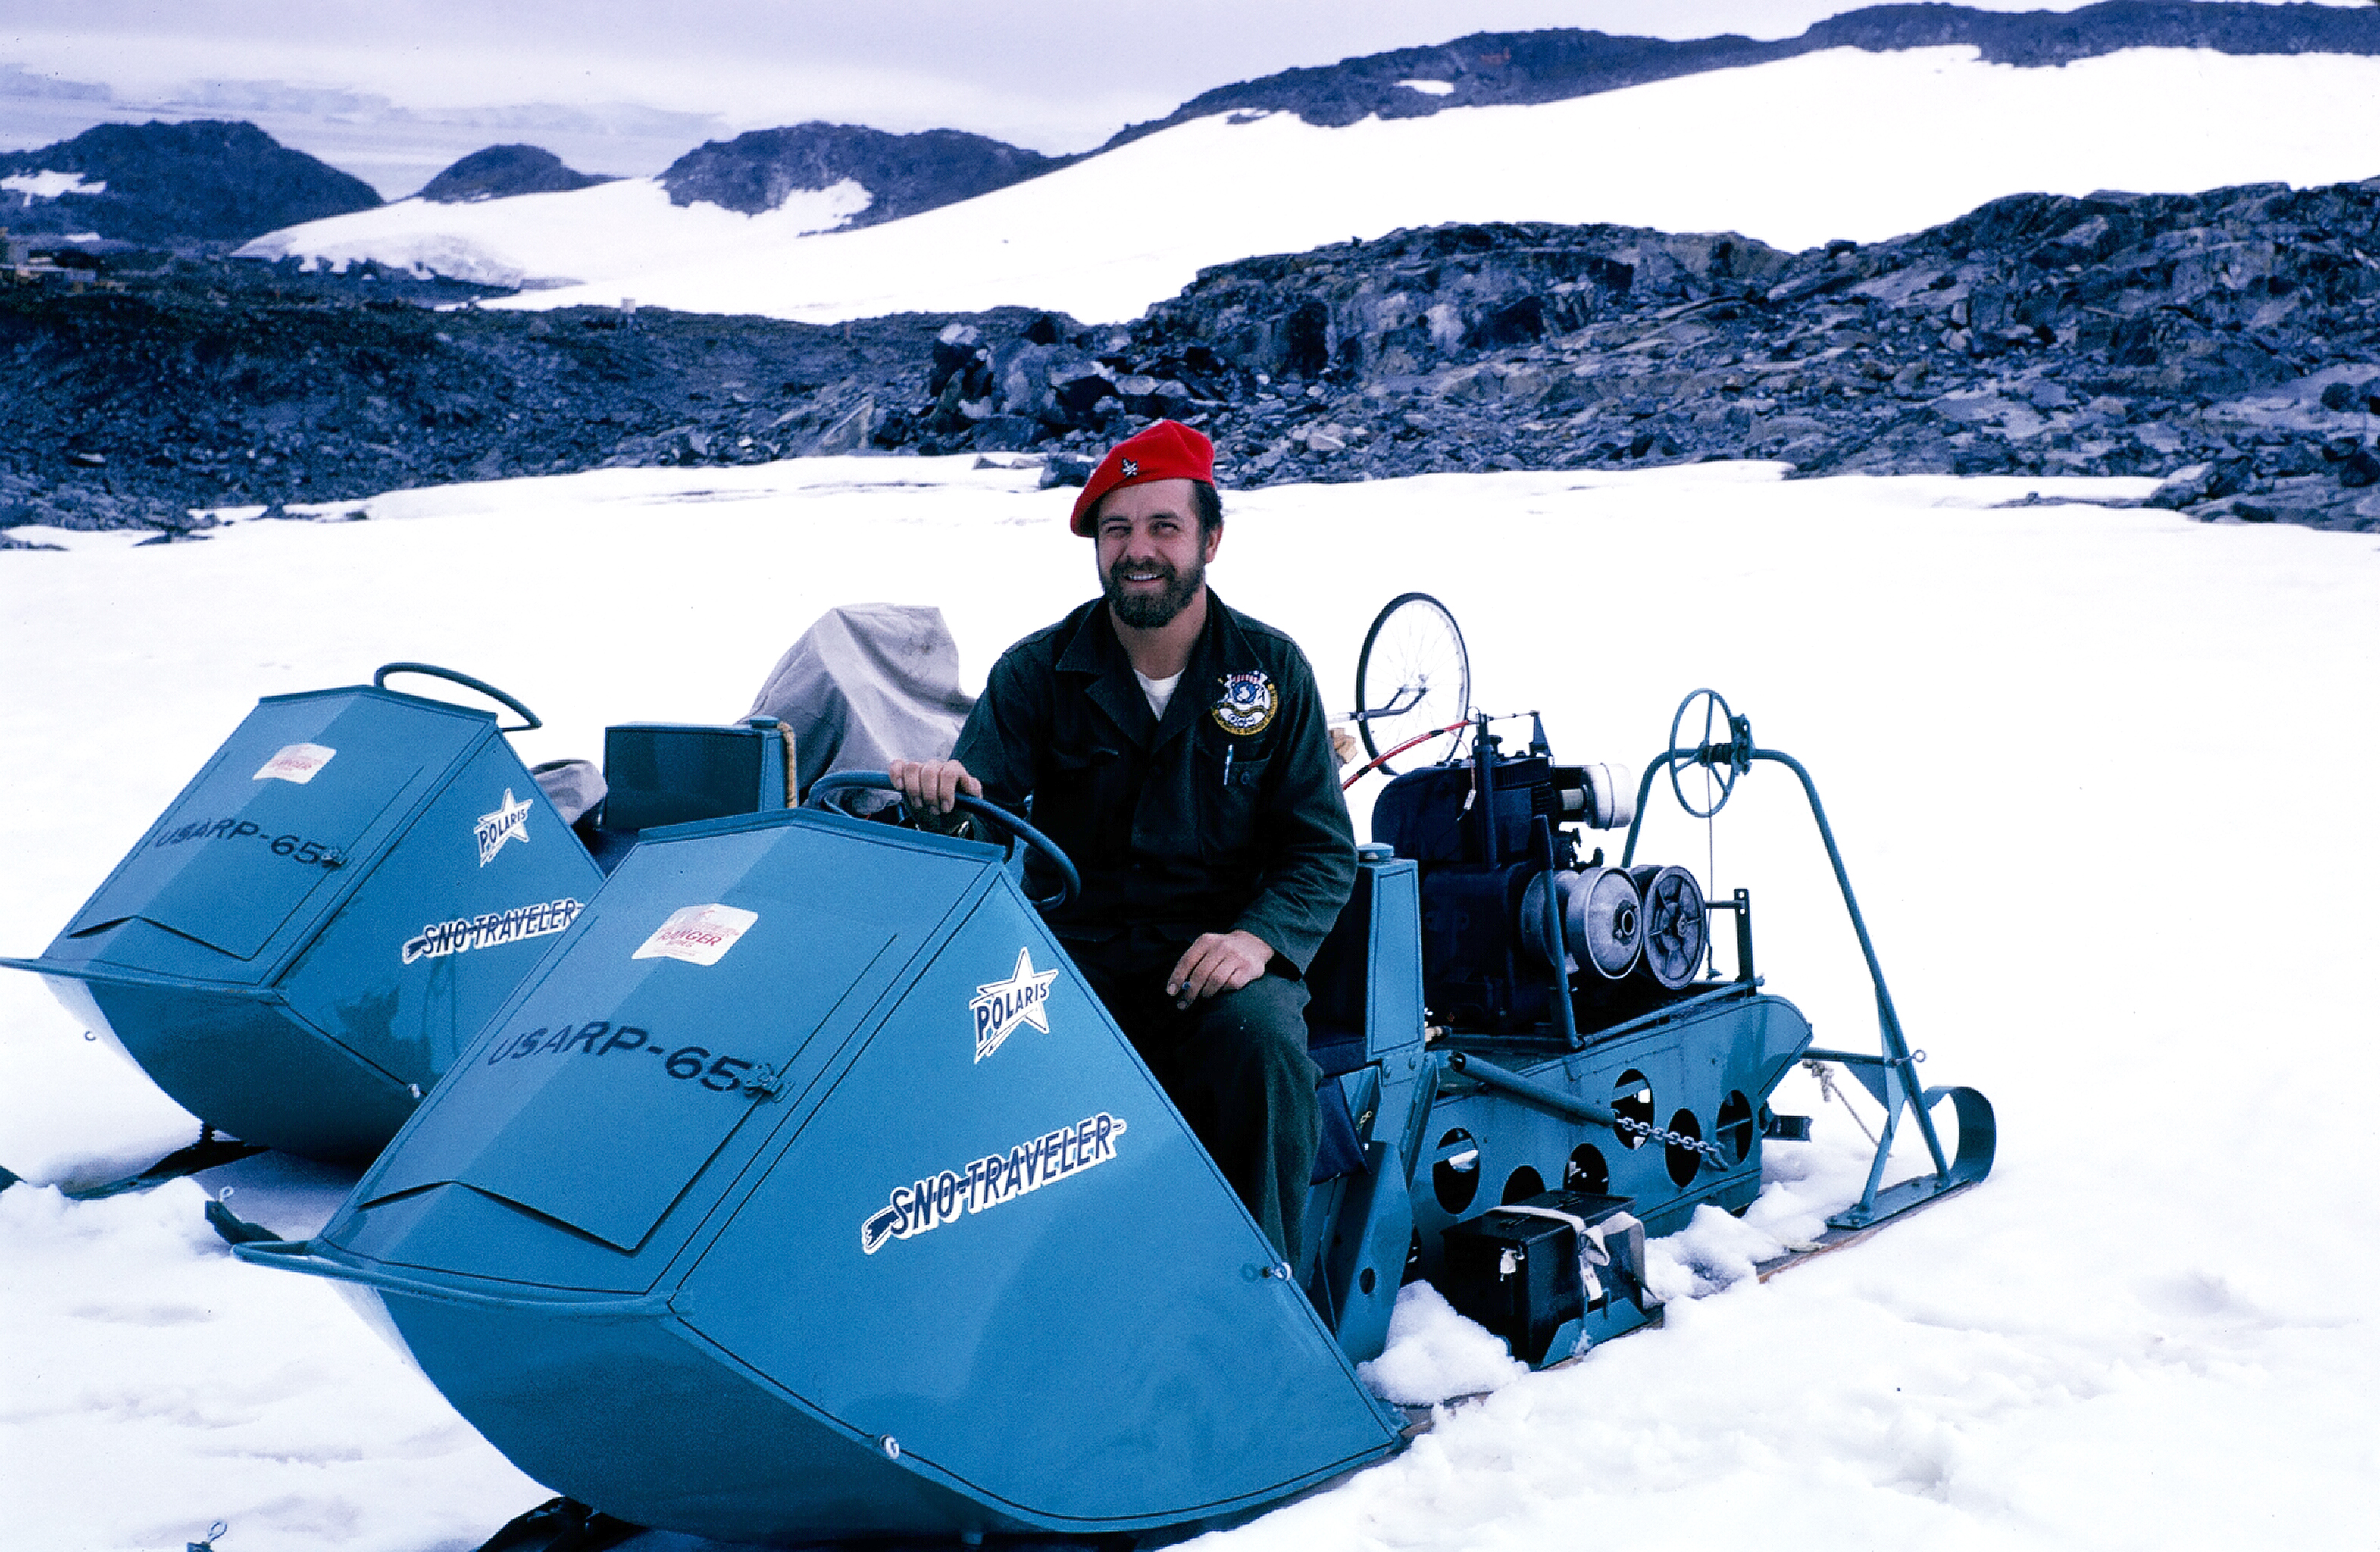 file-polaris-snowmobile-1965-jpg-wikipedia